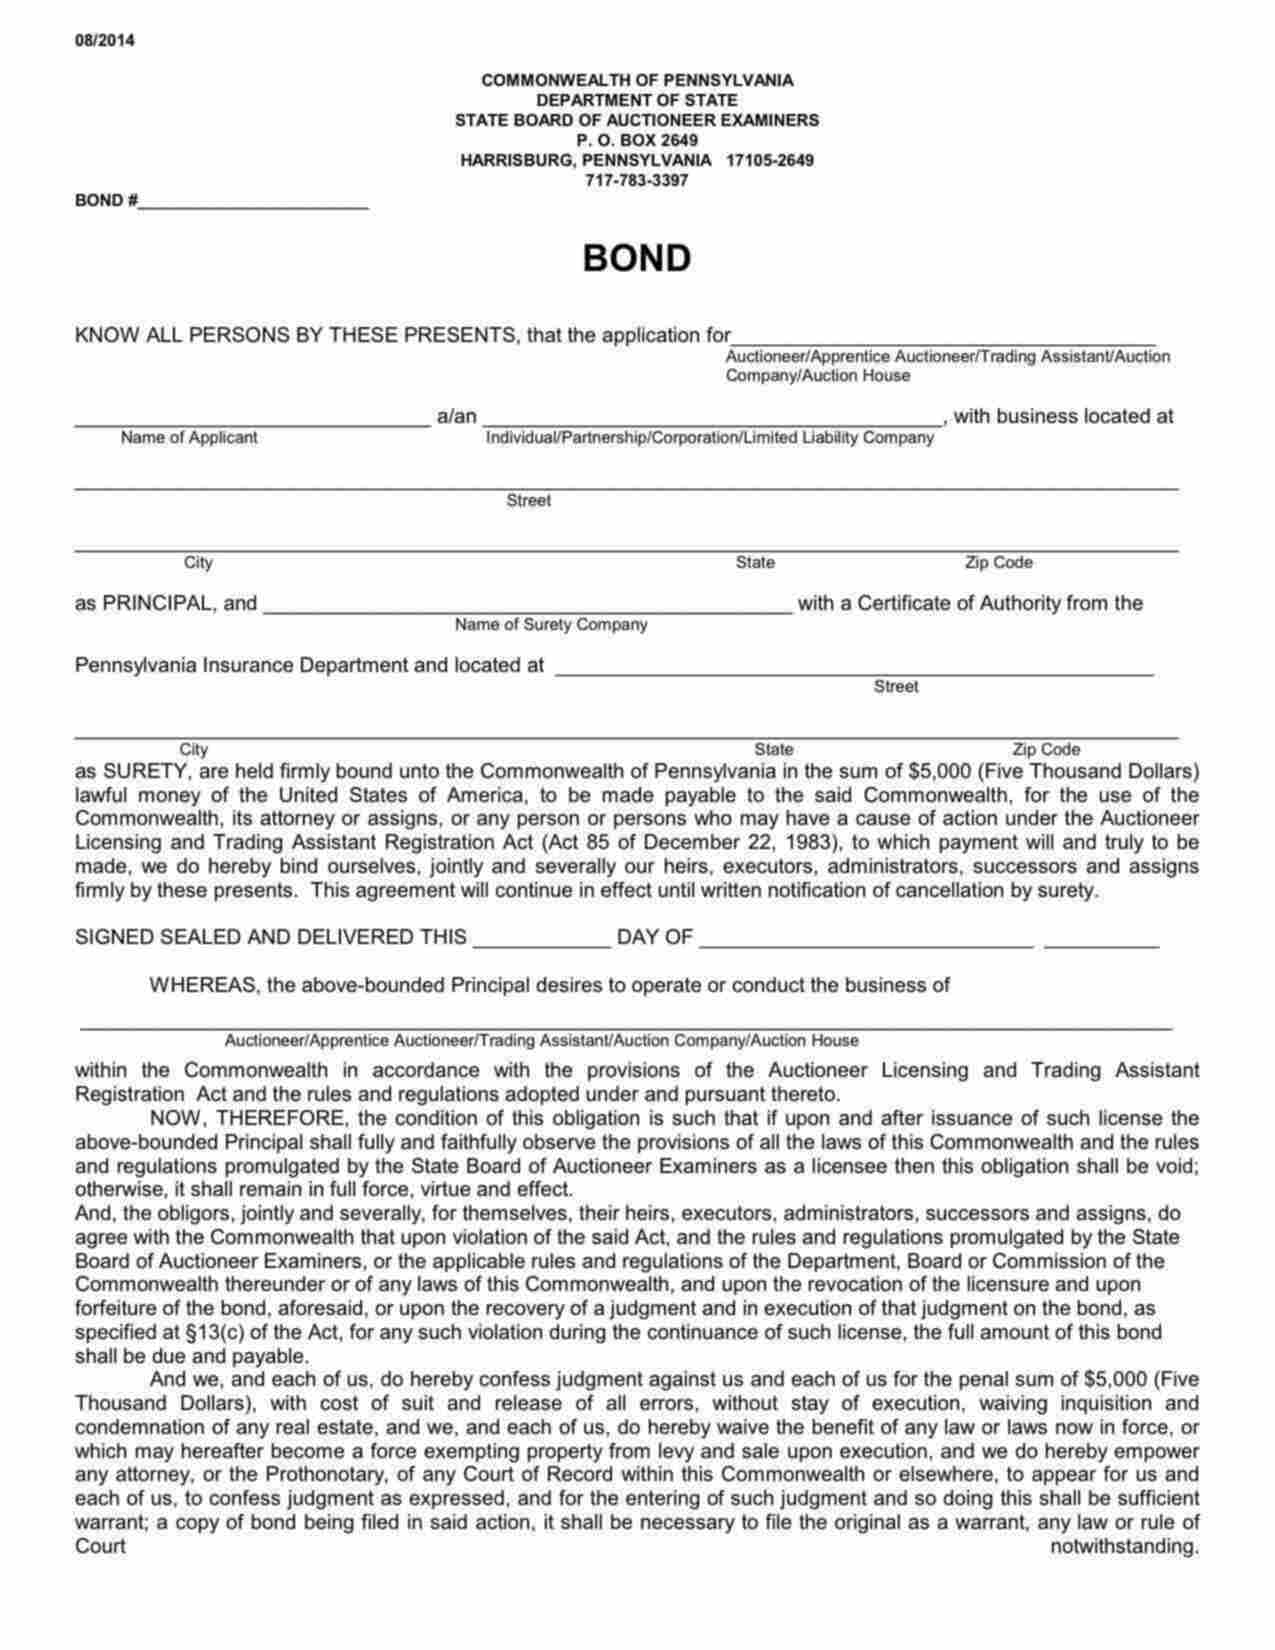 Pennsylvania Trading Assistant Bond Form